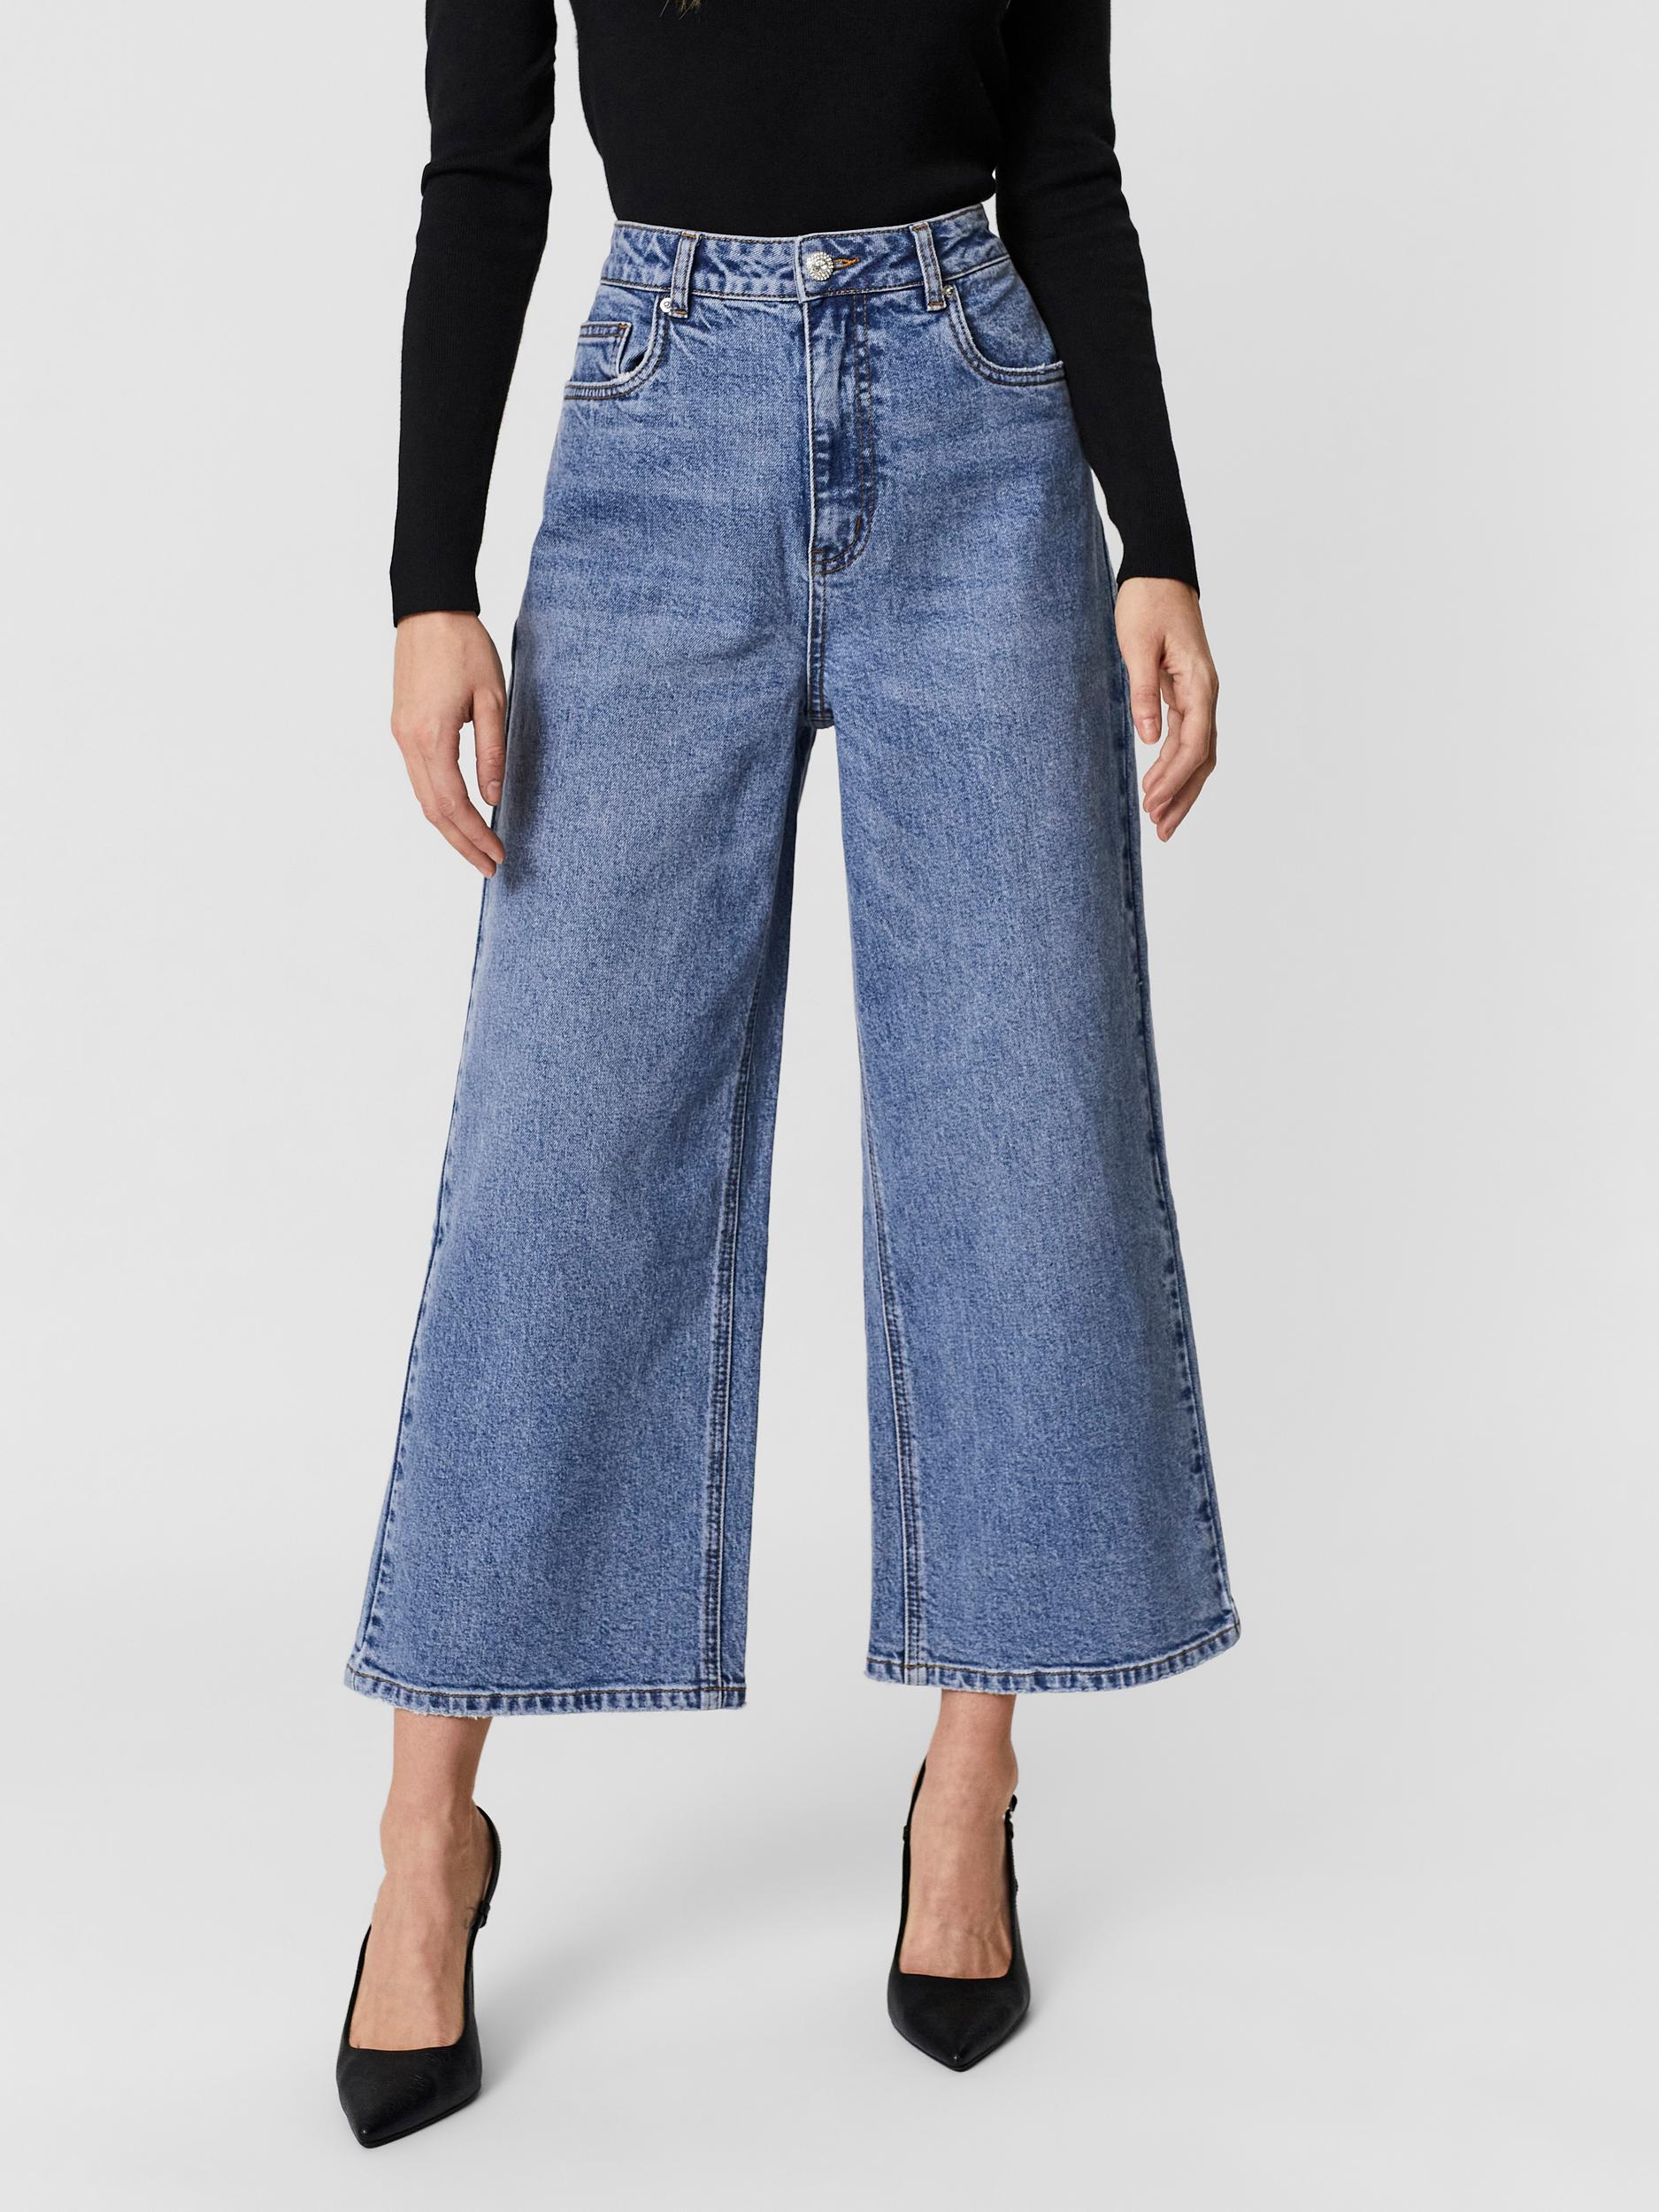 Vero Moda Kathy Jeans, Light Blue Denim, W28/L34